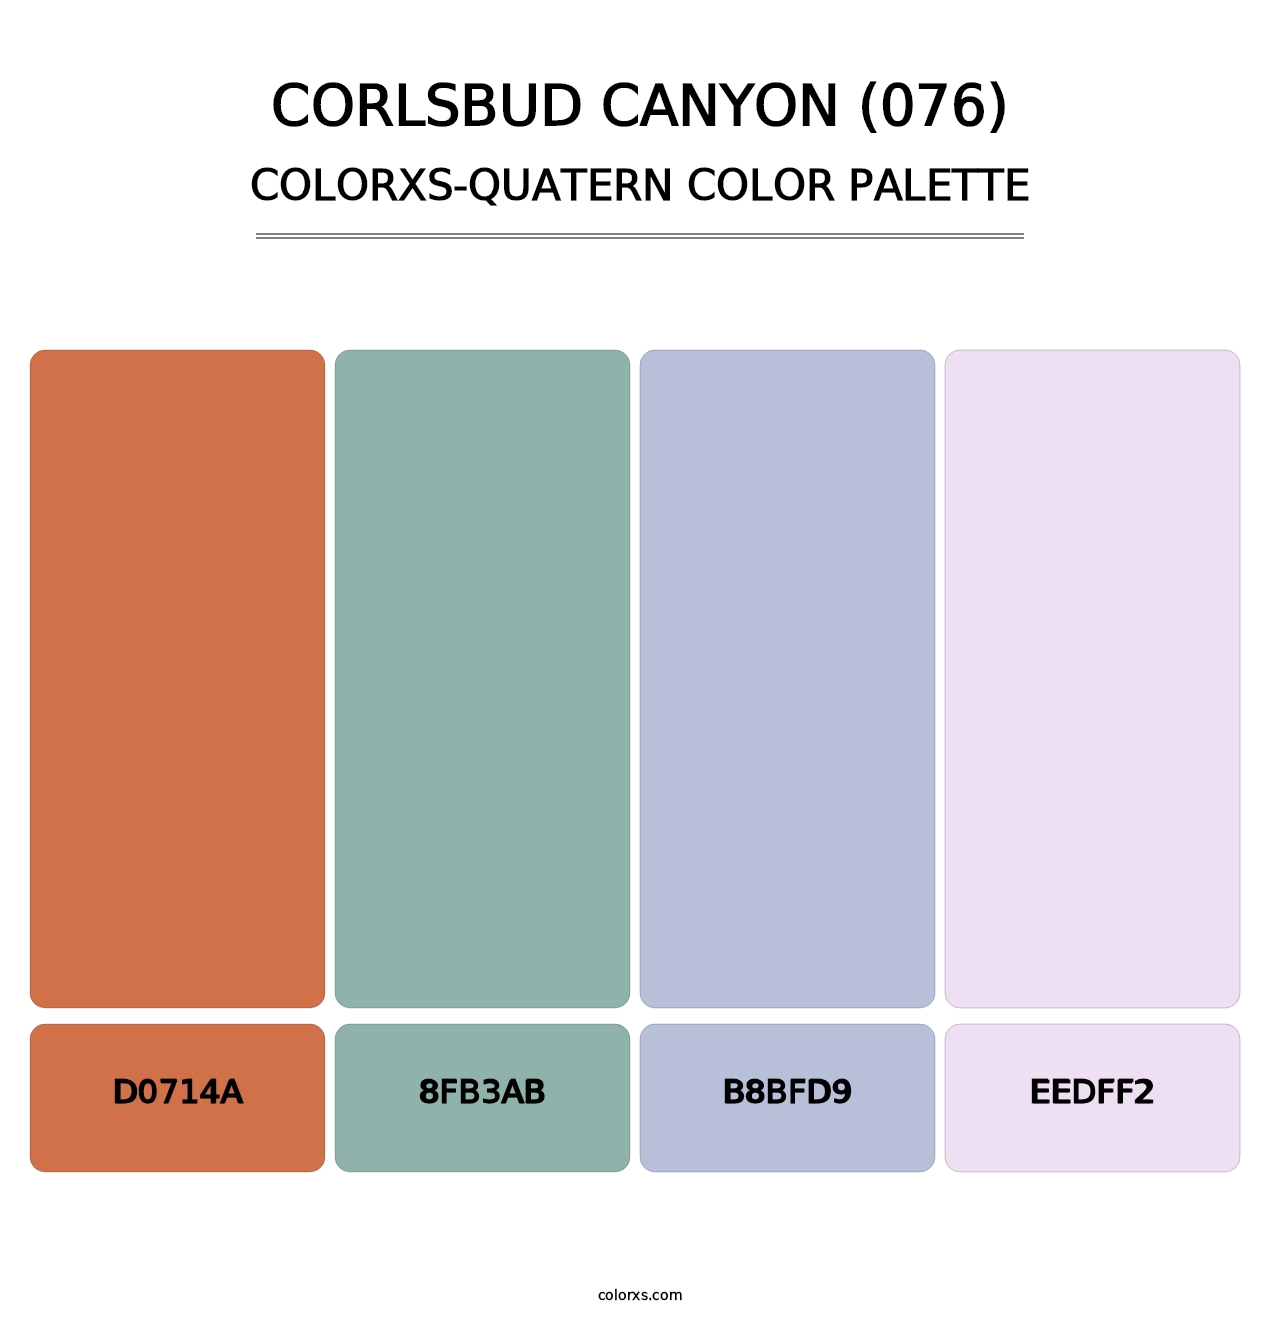 Corlsbud Canyon (076) - Colorxs Quatern Palette